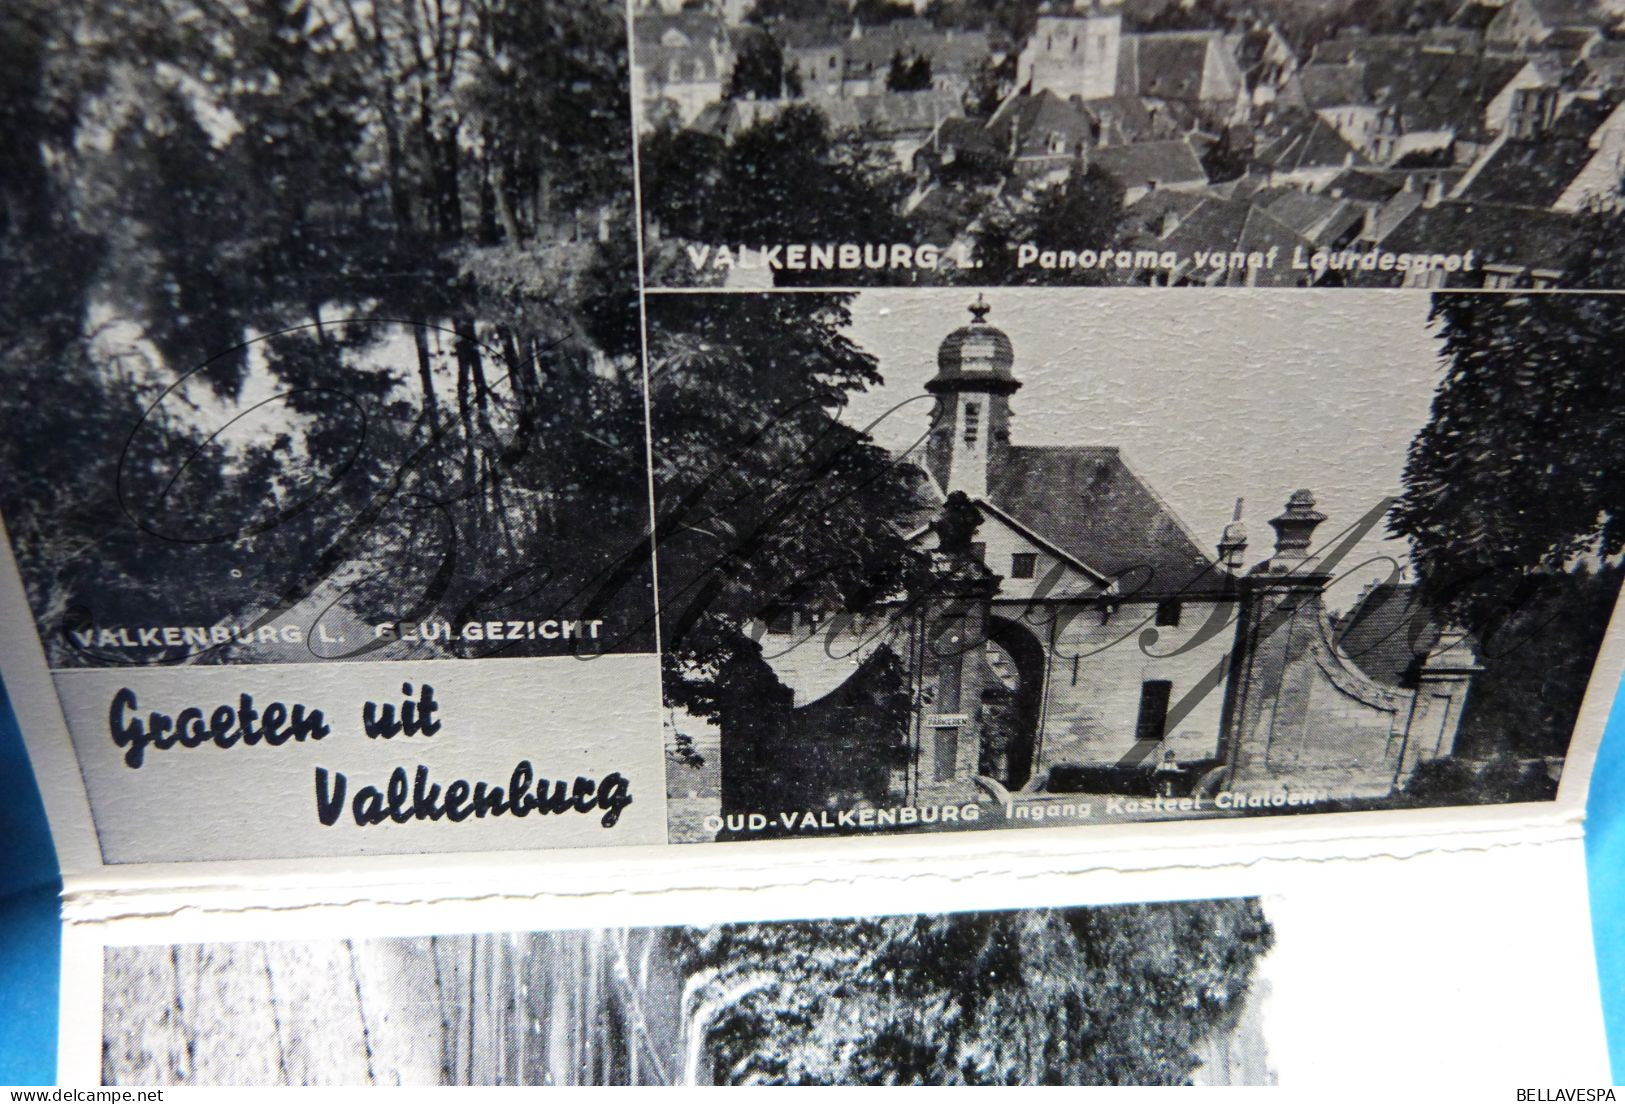 Valkenburg Carnet x 10 ansichtkaarten Nl-Limburg